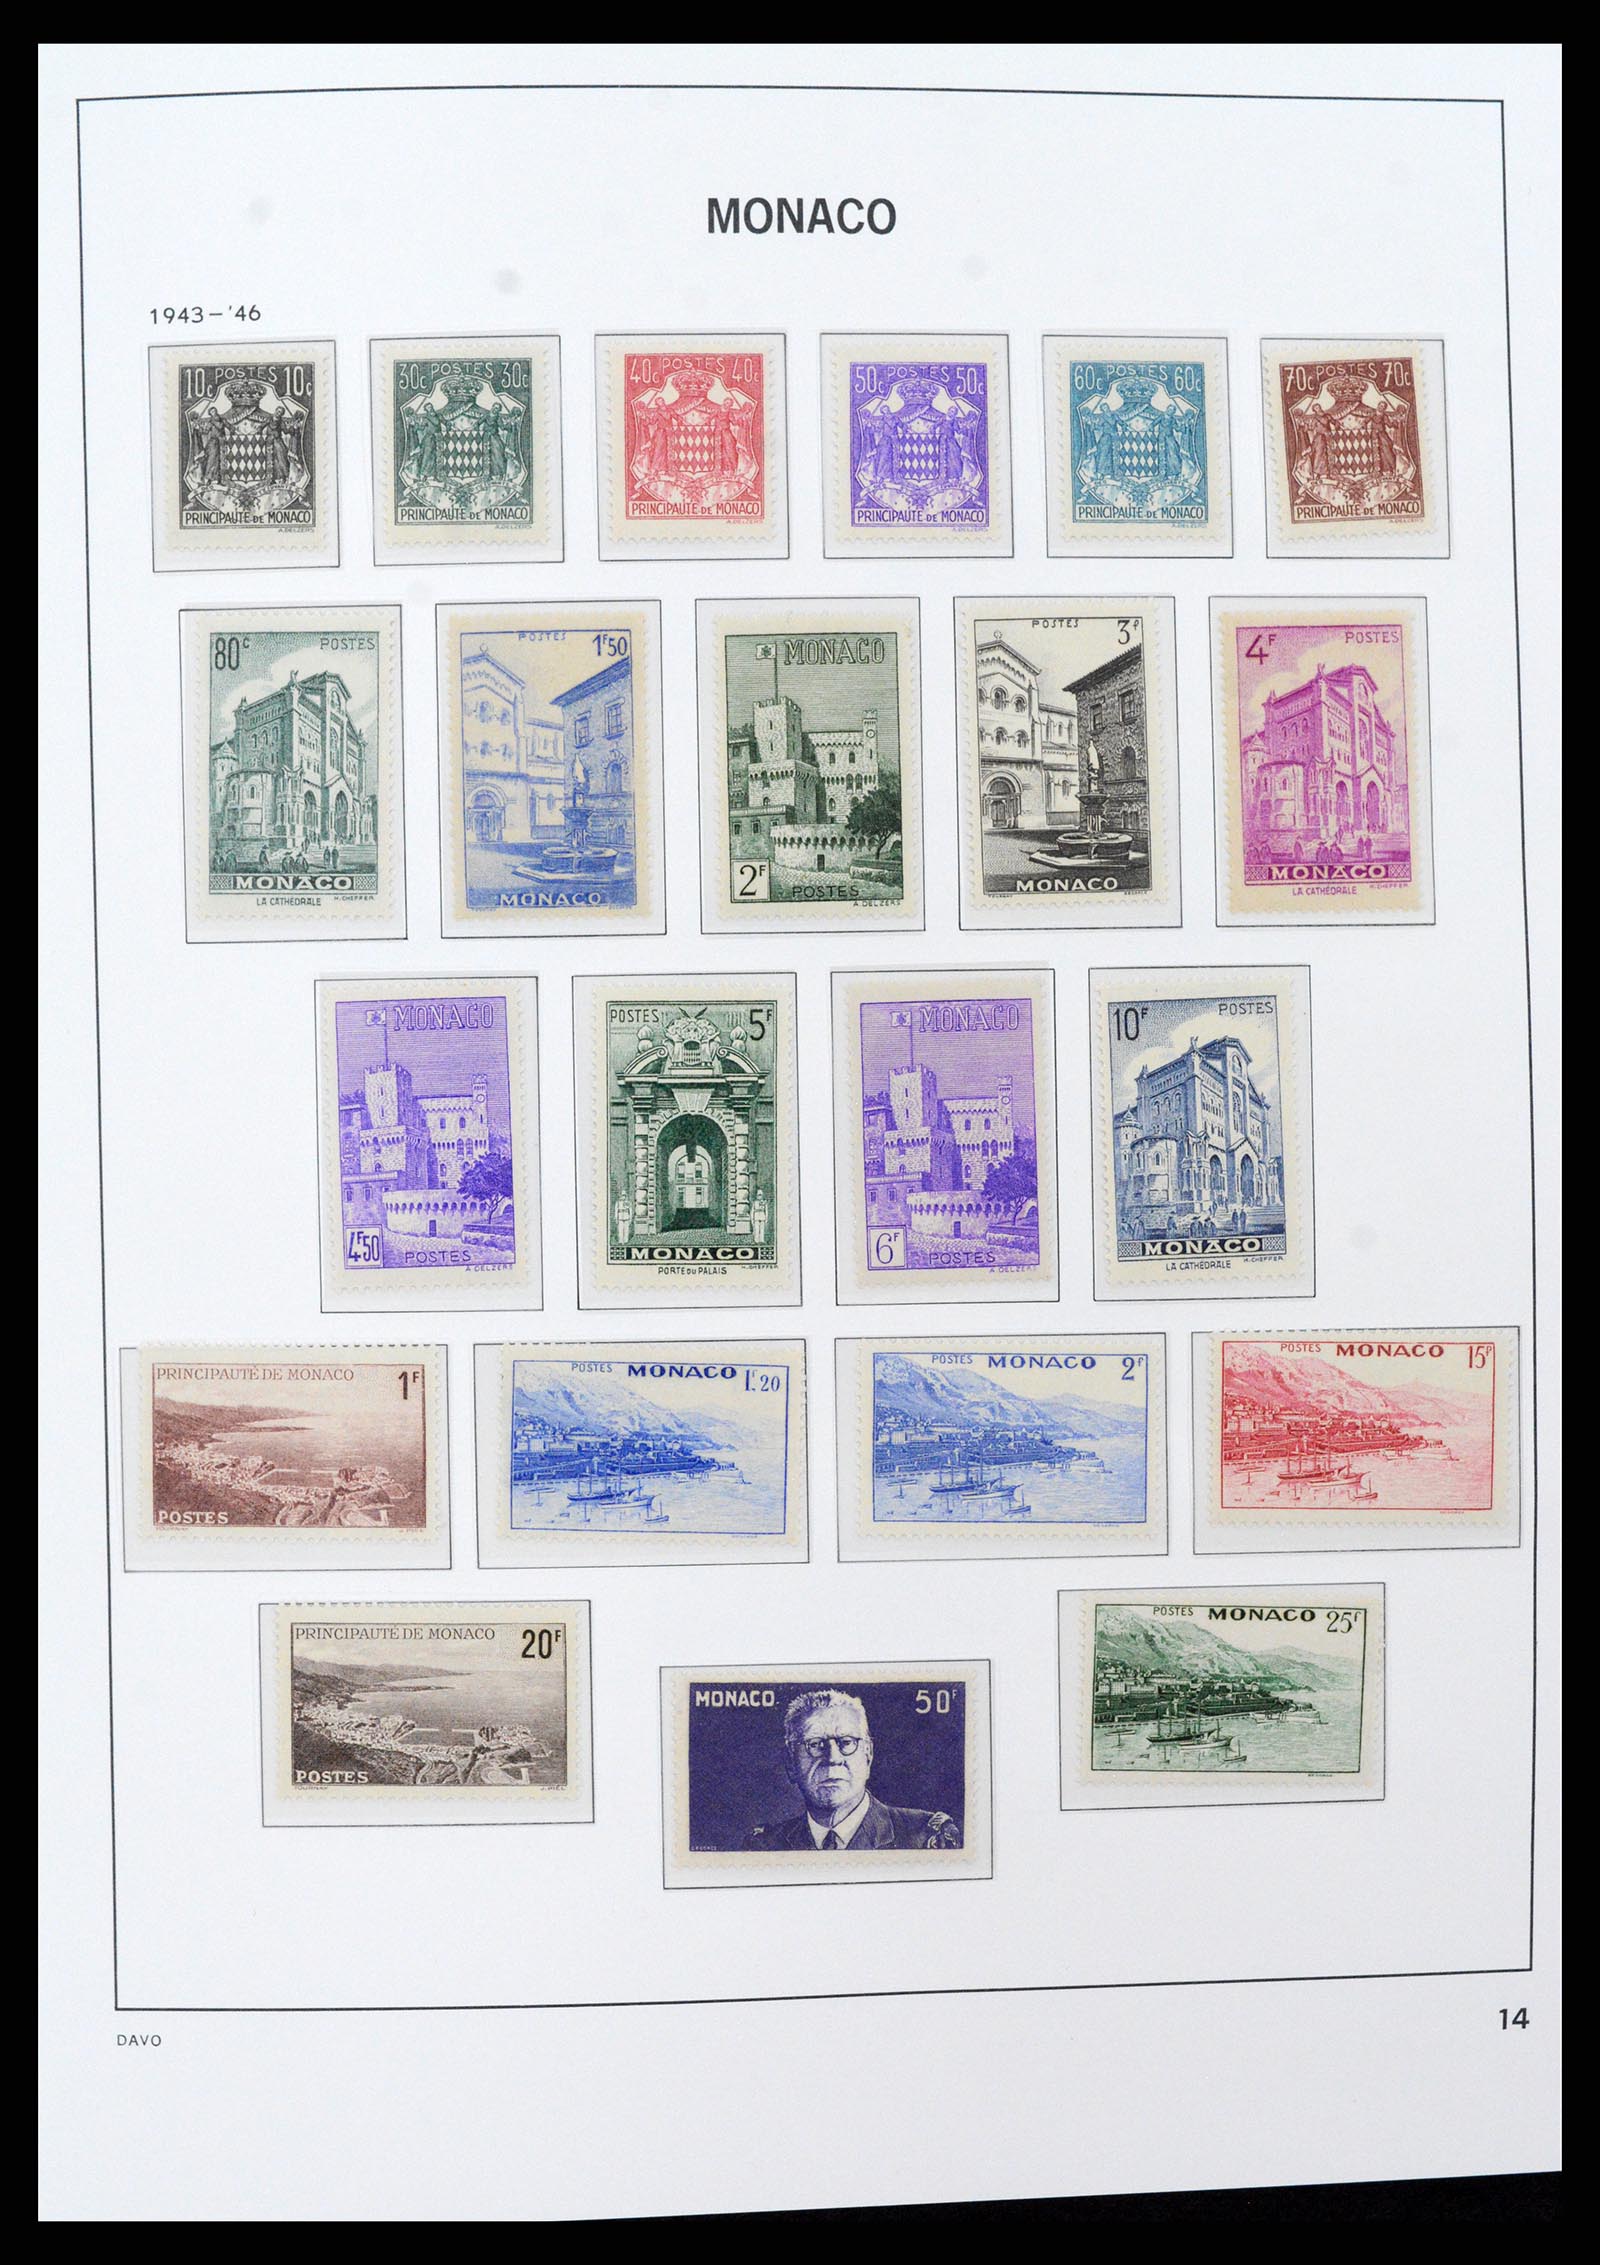 37279 014 - Stamp collection 37279 Monaco 1885-1969.